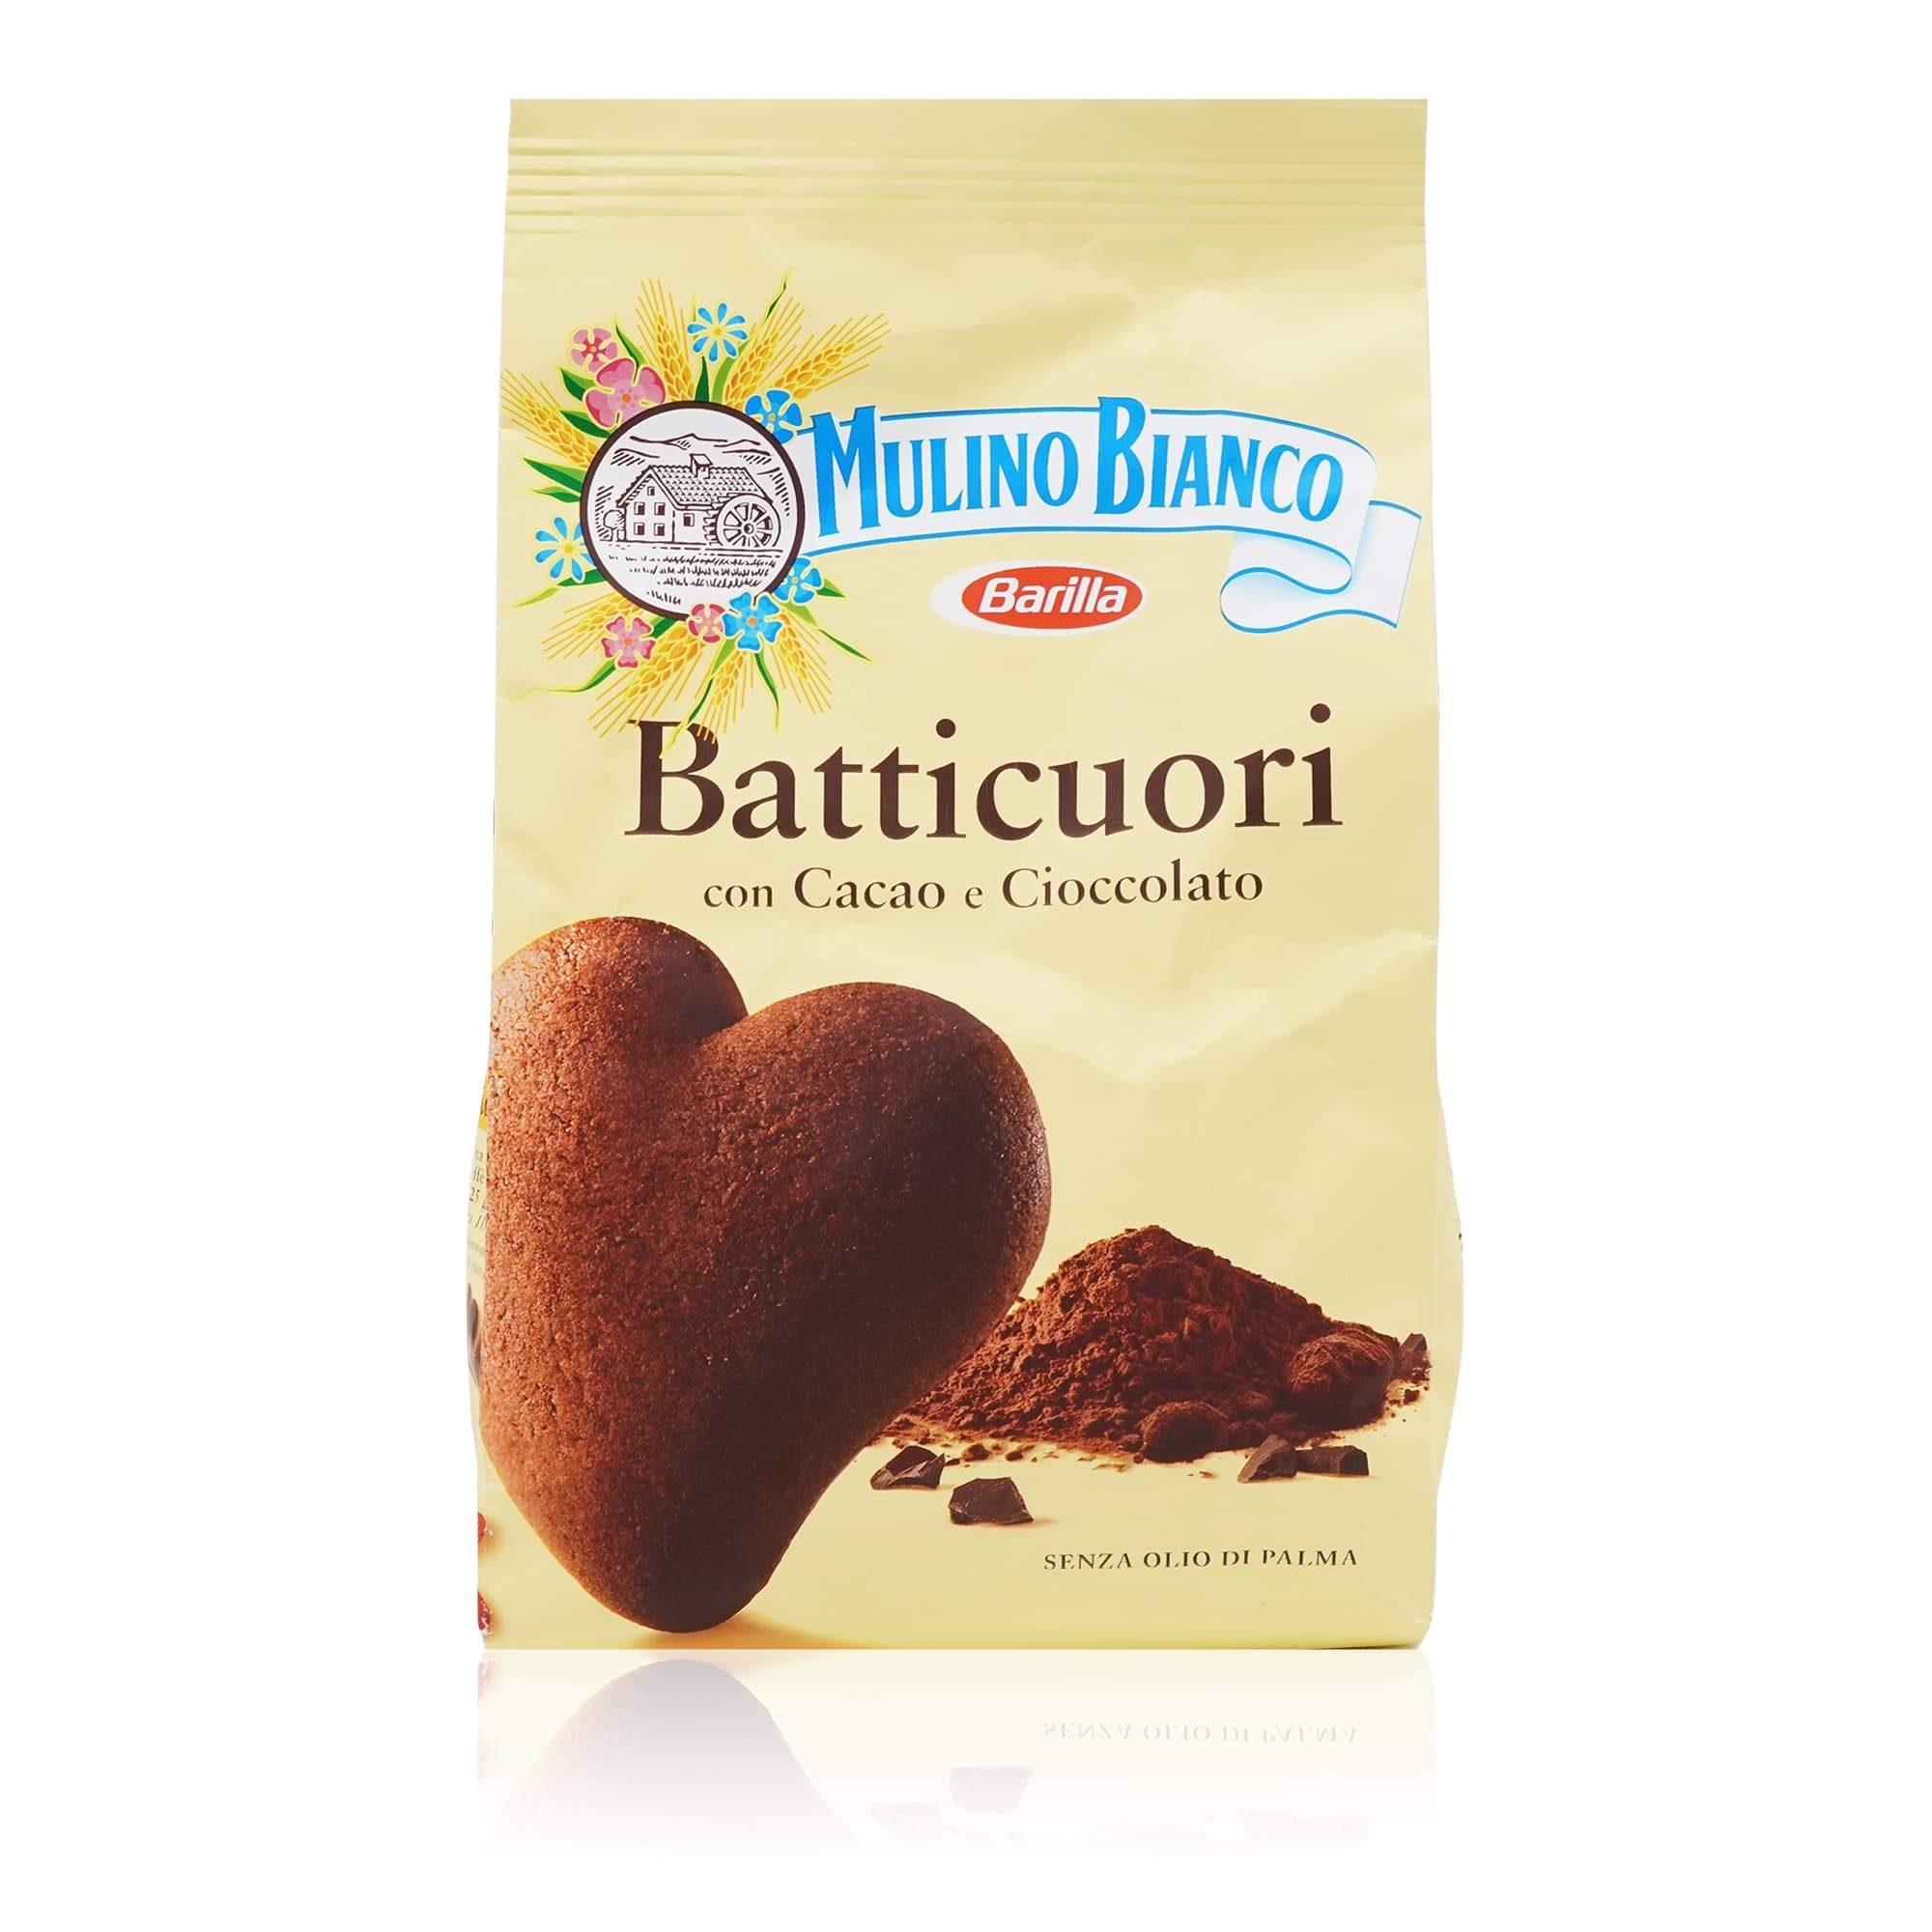 MULINO BIANCO Batticuori cacao e cioccolato – Kakao und Schokolade - 0,350kg - italienisch - einkaufen.de